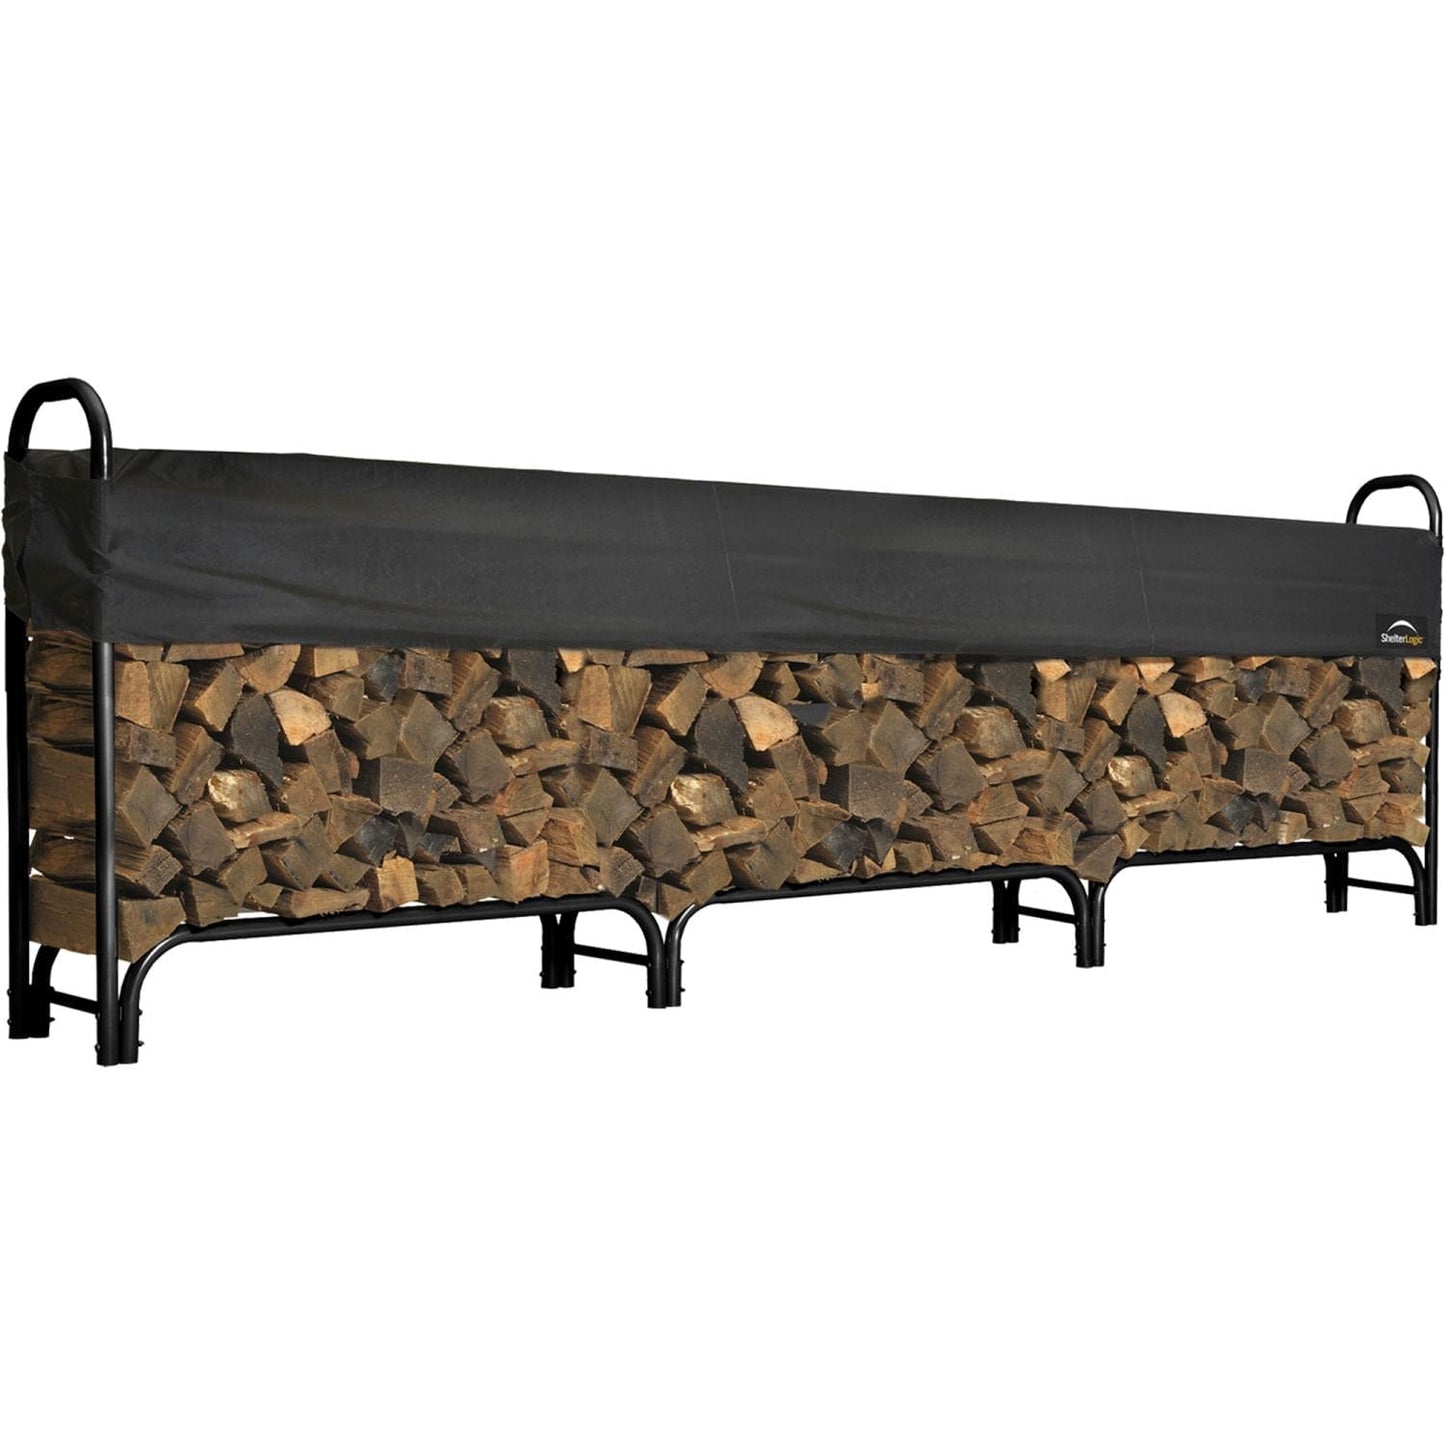 ShelterLogic Firewood & Hearth Products ShelterLogic | Heavy Duty Firewood Rack 12 ft. With Cover 90403